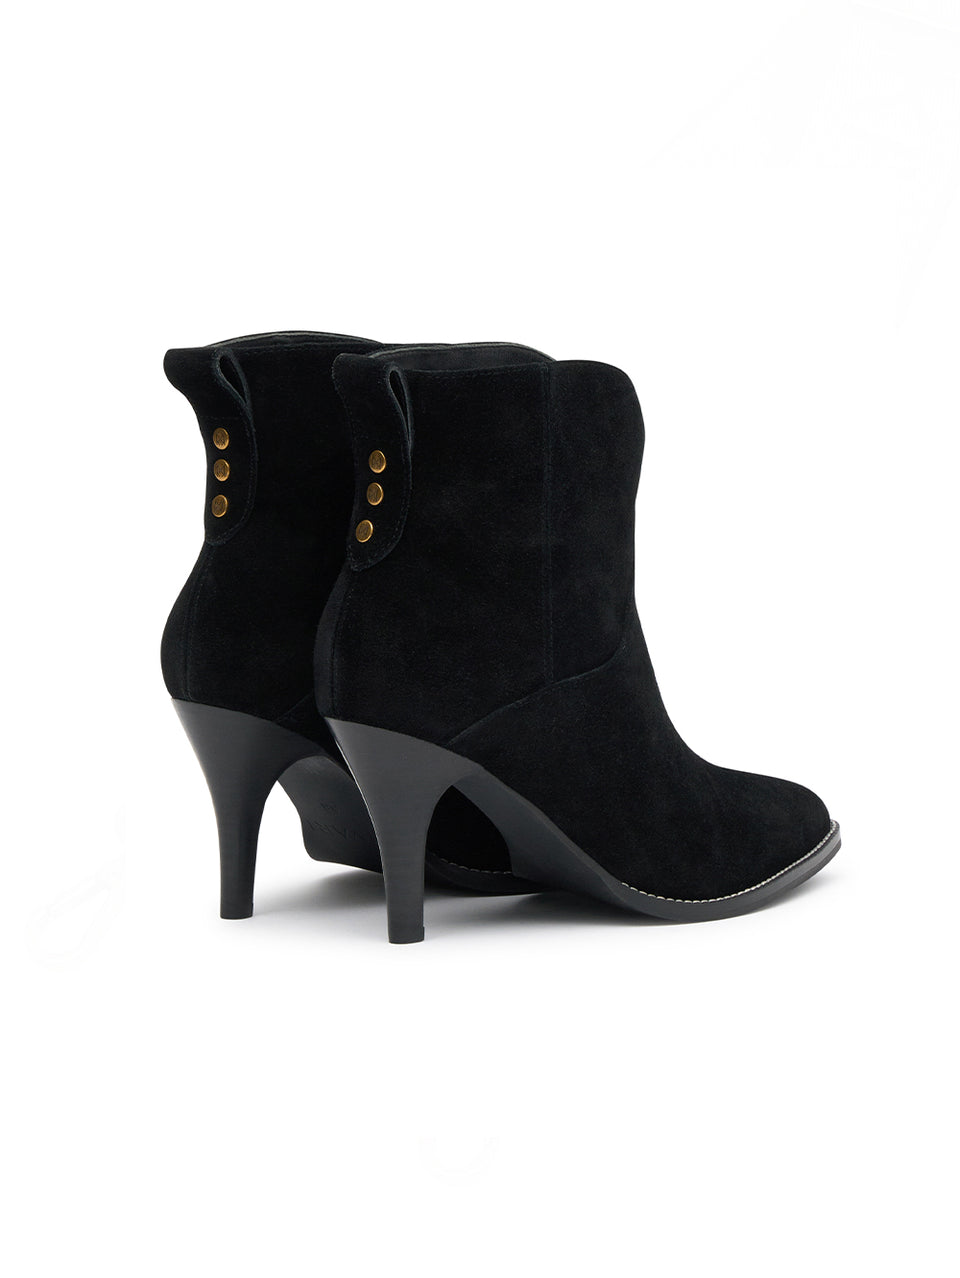 Kate Boot Black KIVARI | Black suede leather short boot back view